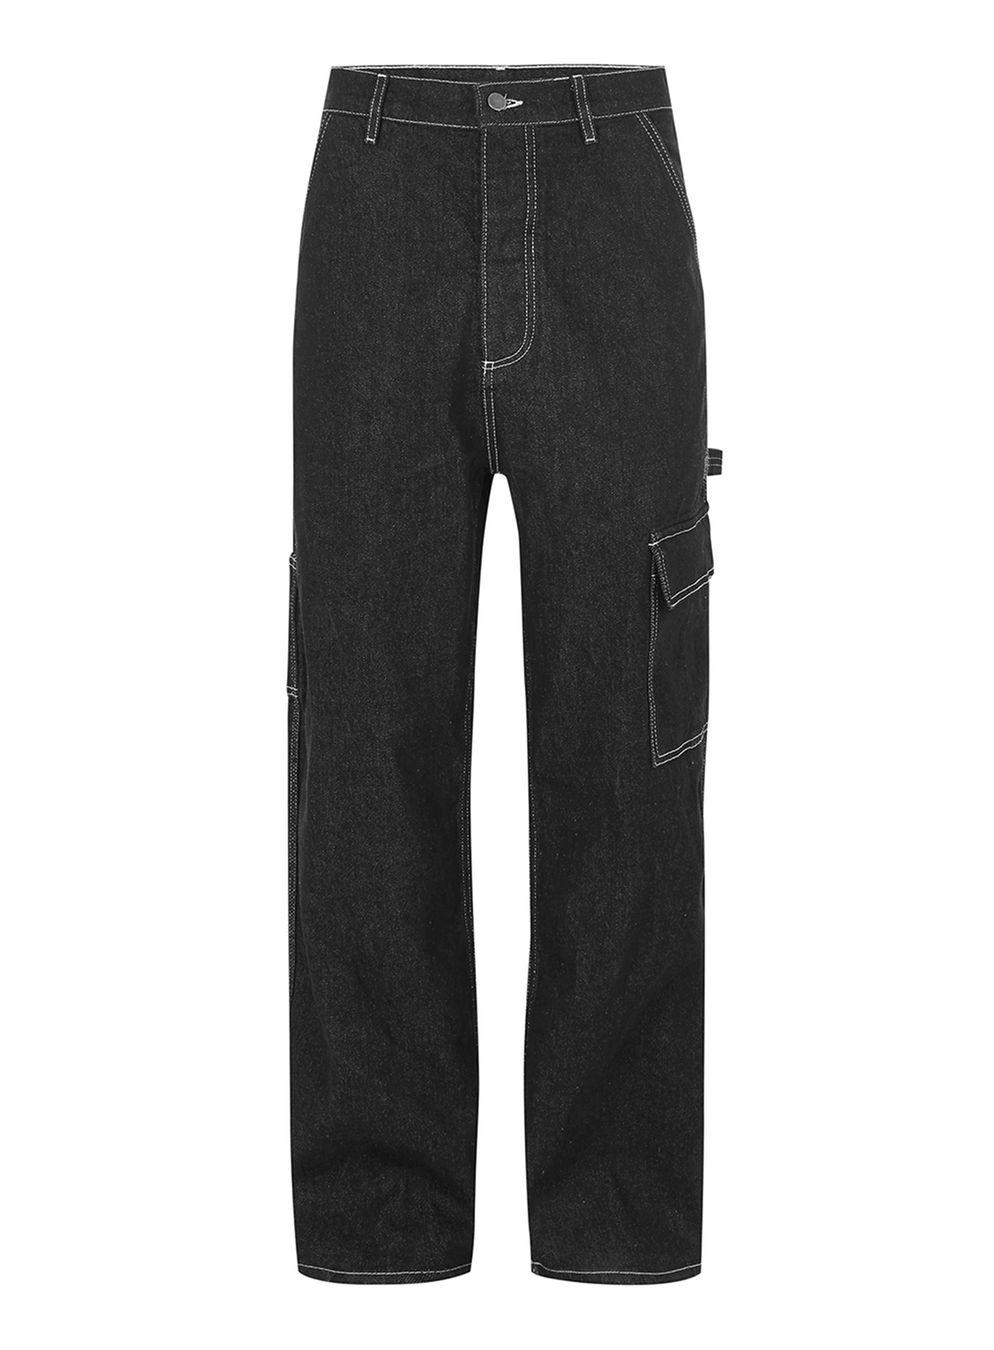 Lyst - Topman Design Black Wide Leg Jeans in Black for Men